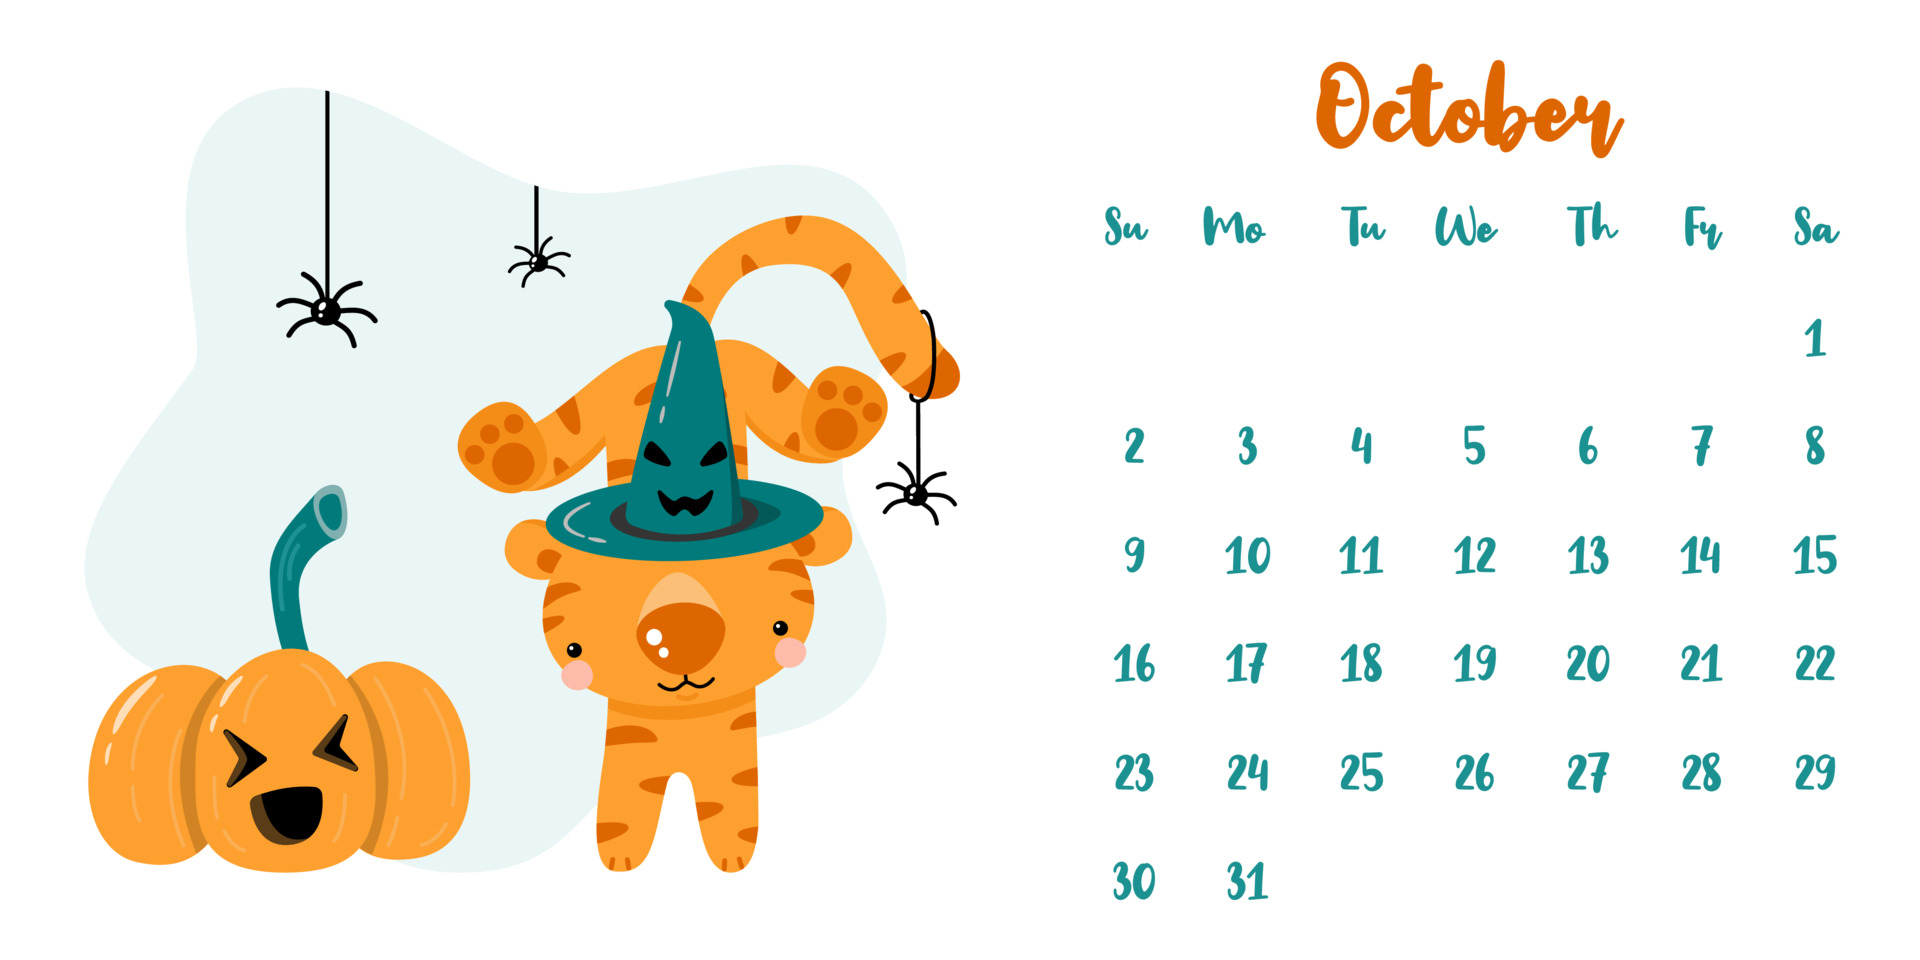 Cute October 2022 Calendar Calendar For October 2022 With Cute Cartoon Tiger And Halloween Pumpkin  3479940 Vector Art At Vecteezy